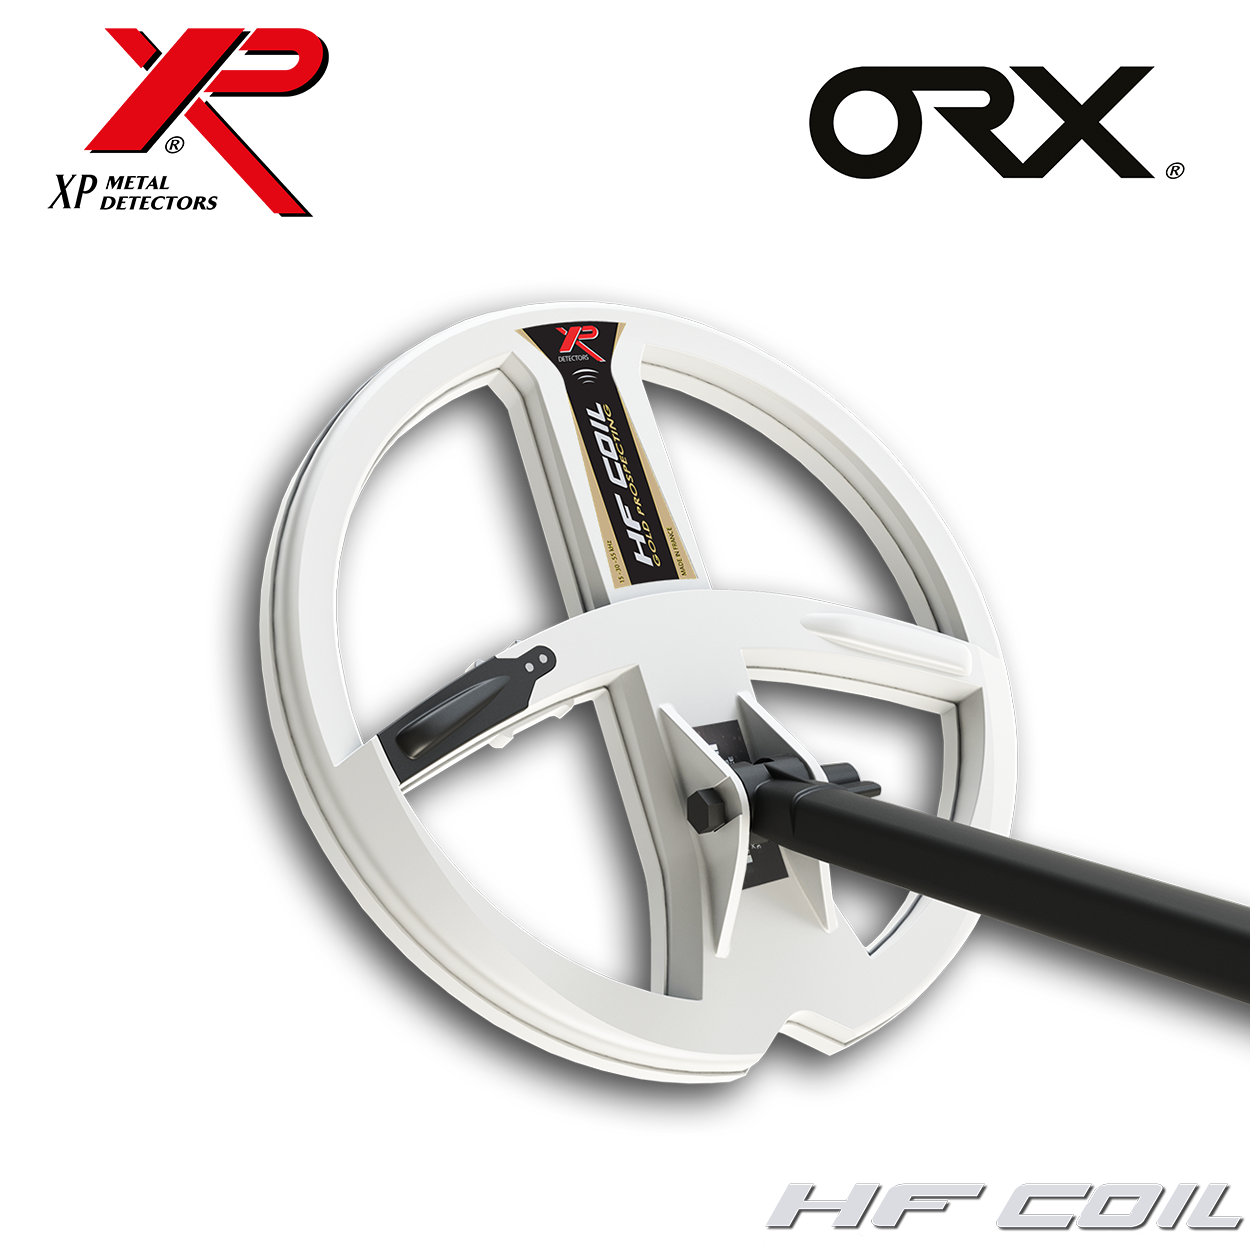 22 HF XP Metalldetektor ORX RC WSA